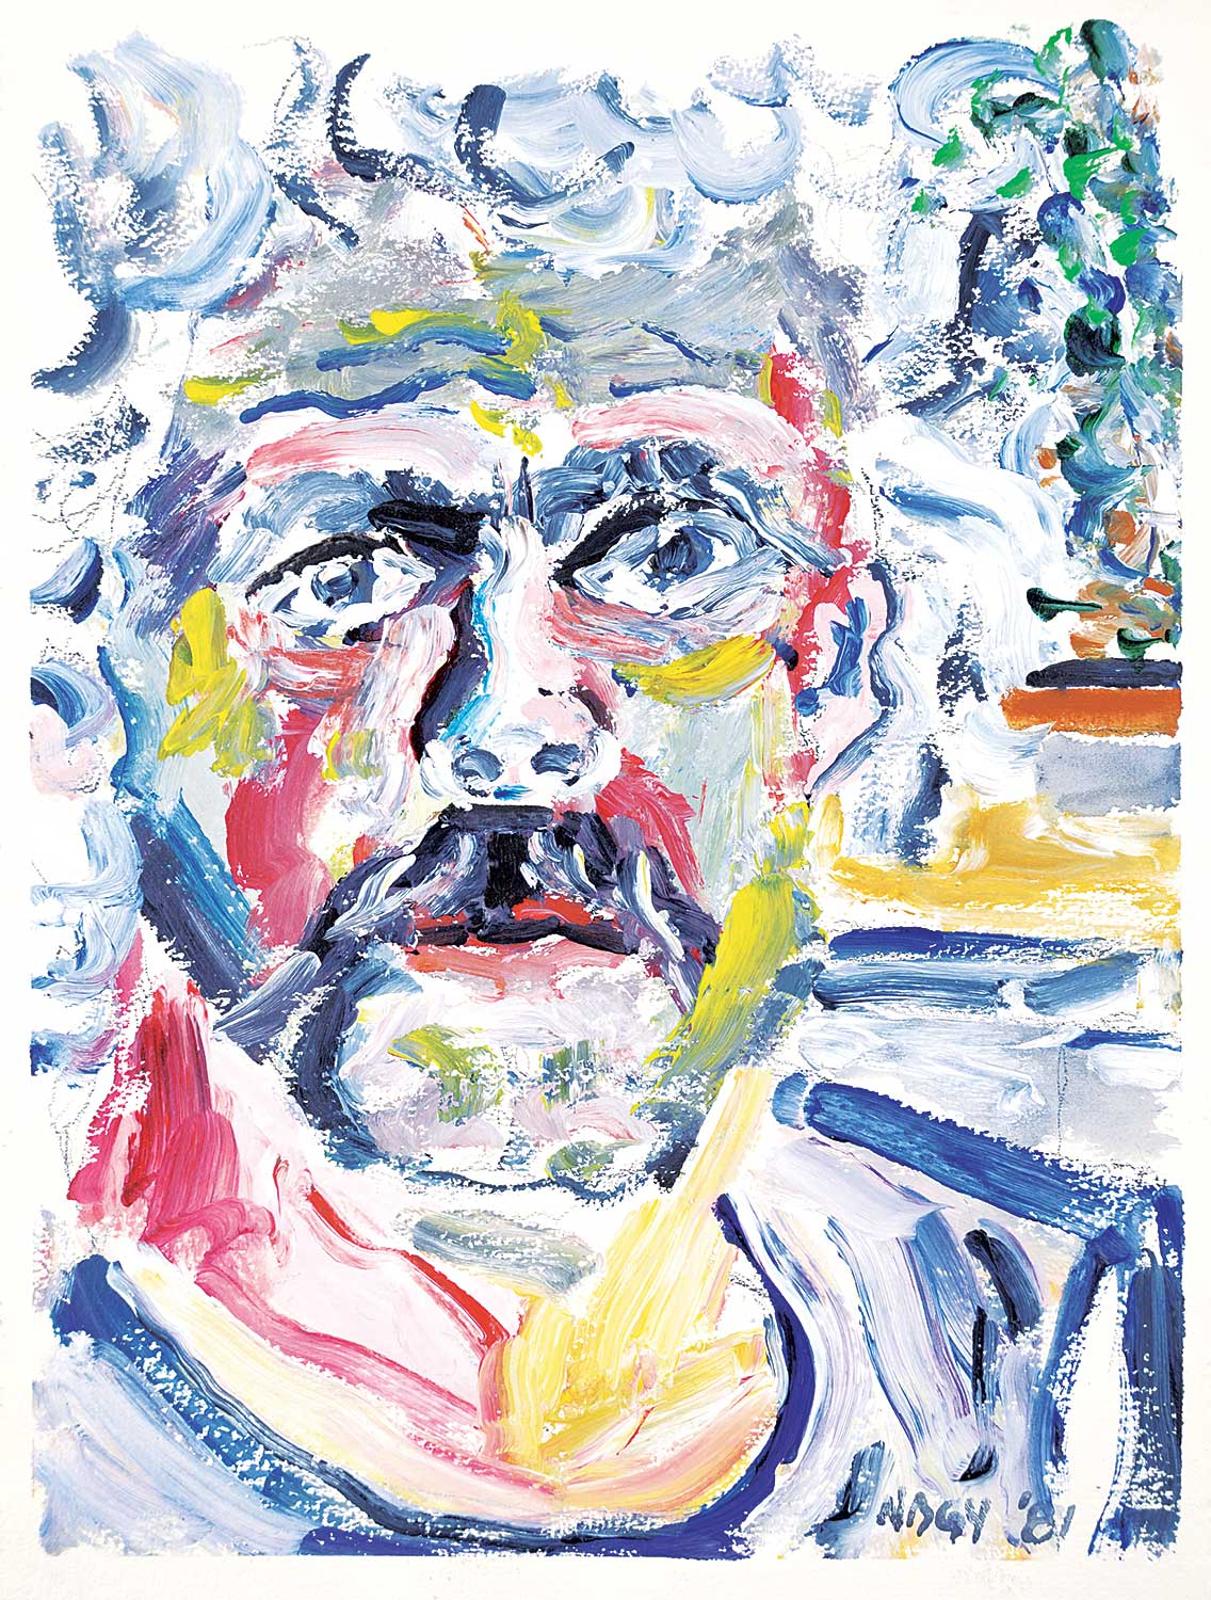 Gabor L. Nagy (1945) - Self Portrait with a R.Myren Canvas as Background #2